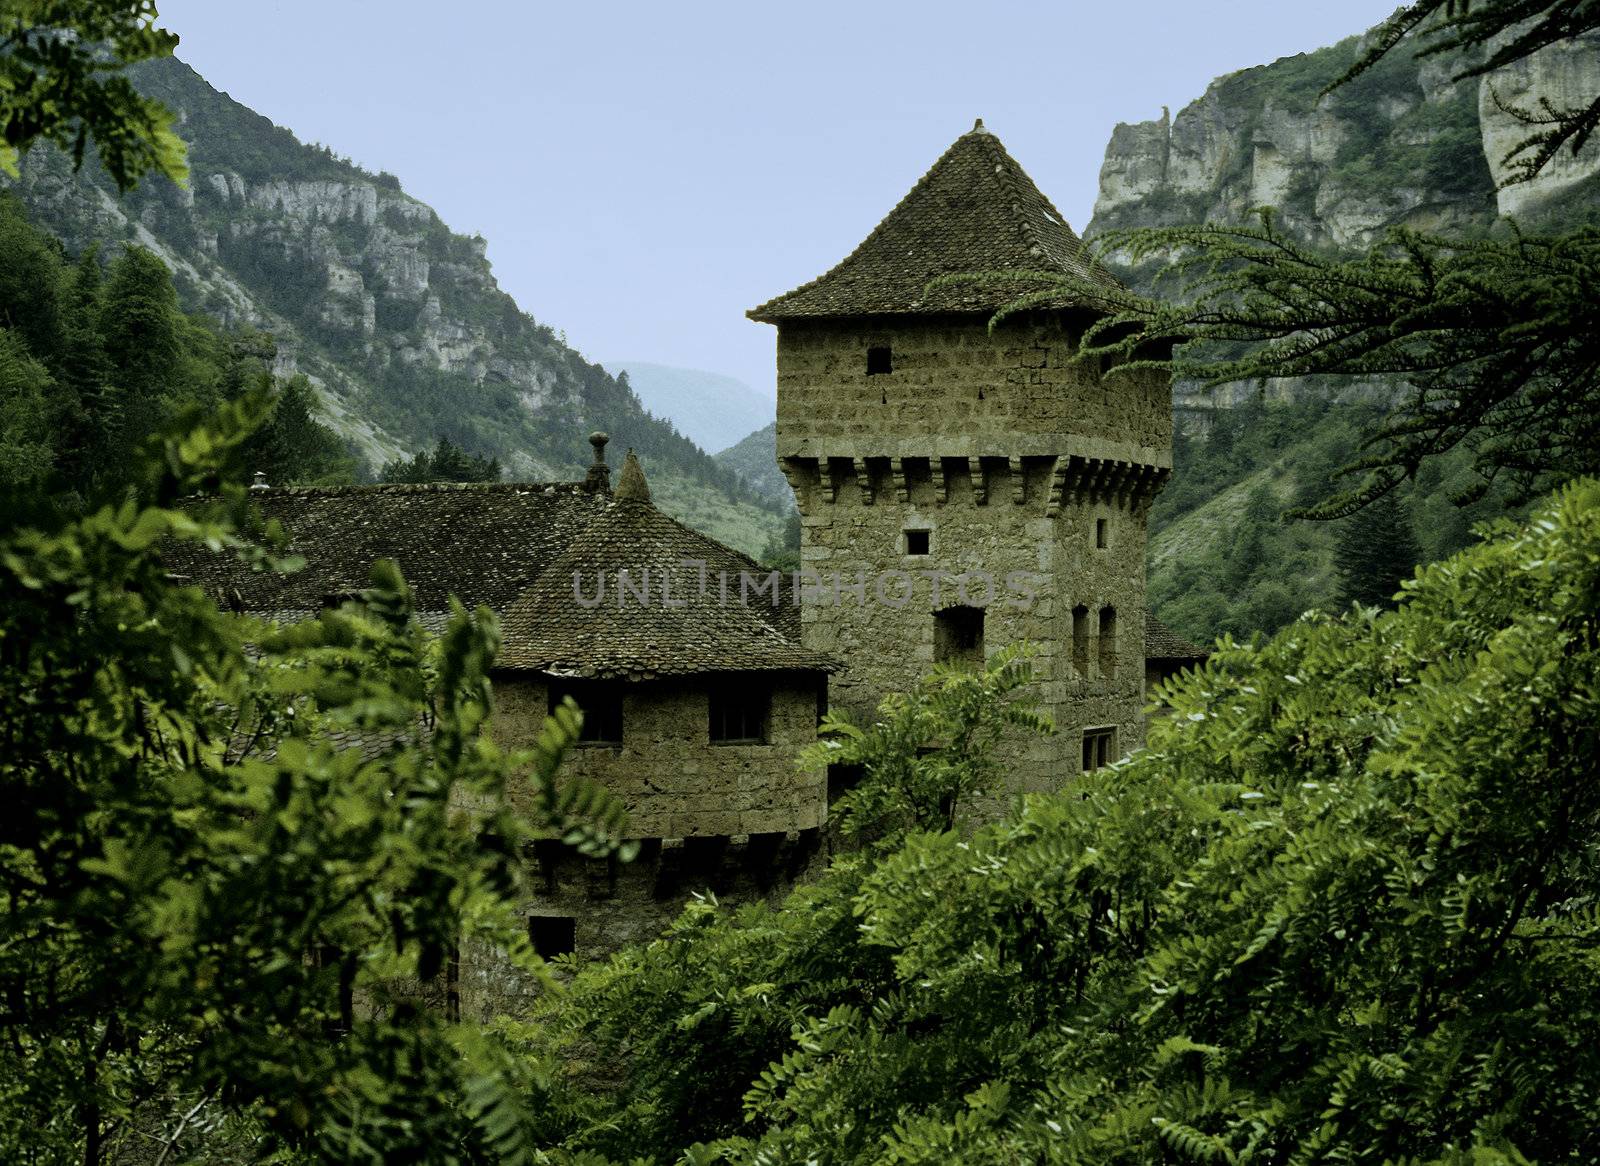 Sone turrets on castle in rocky gorge in Europe